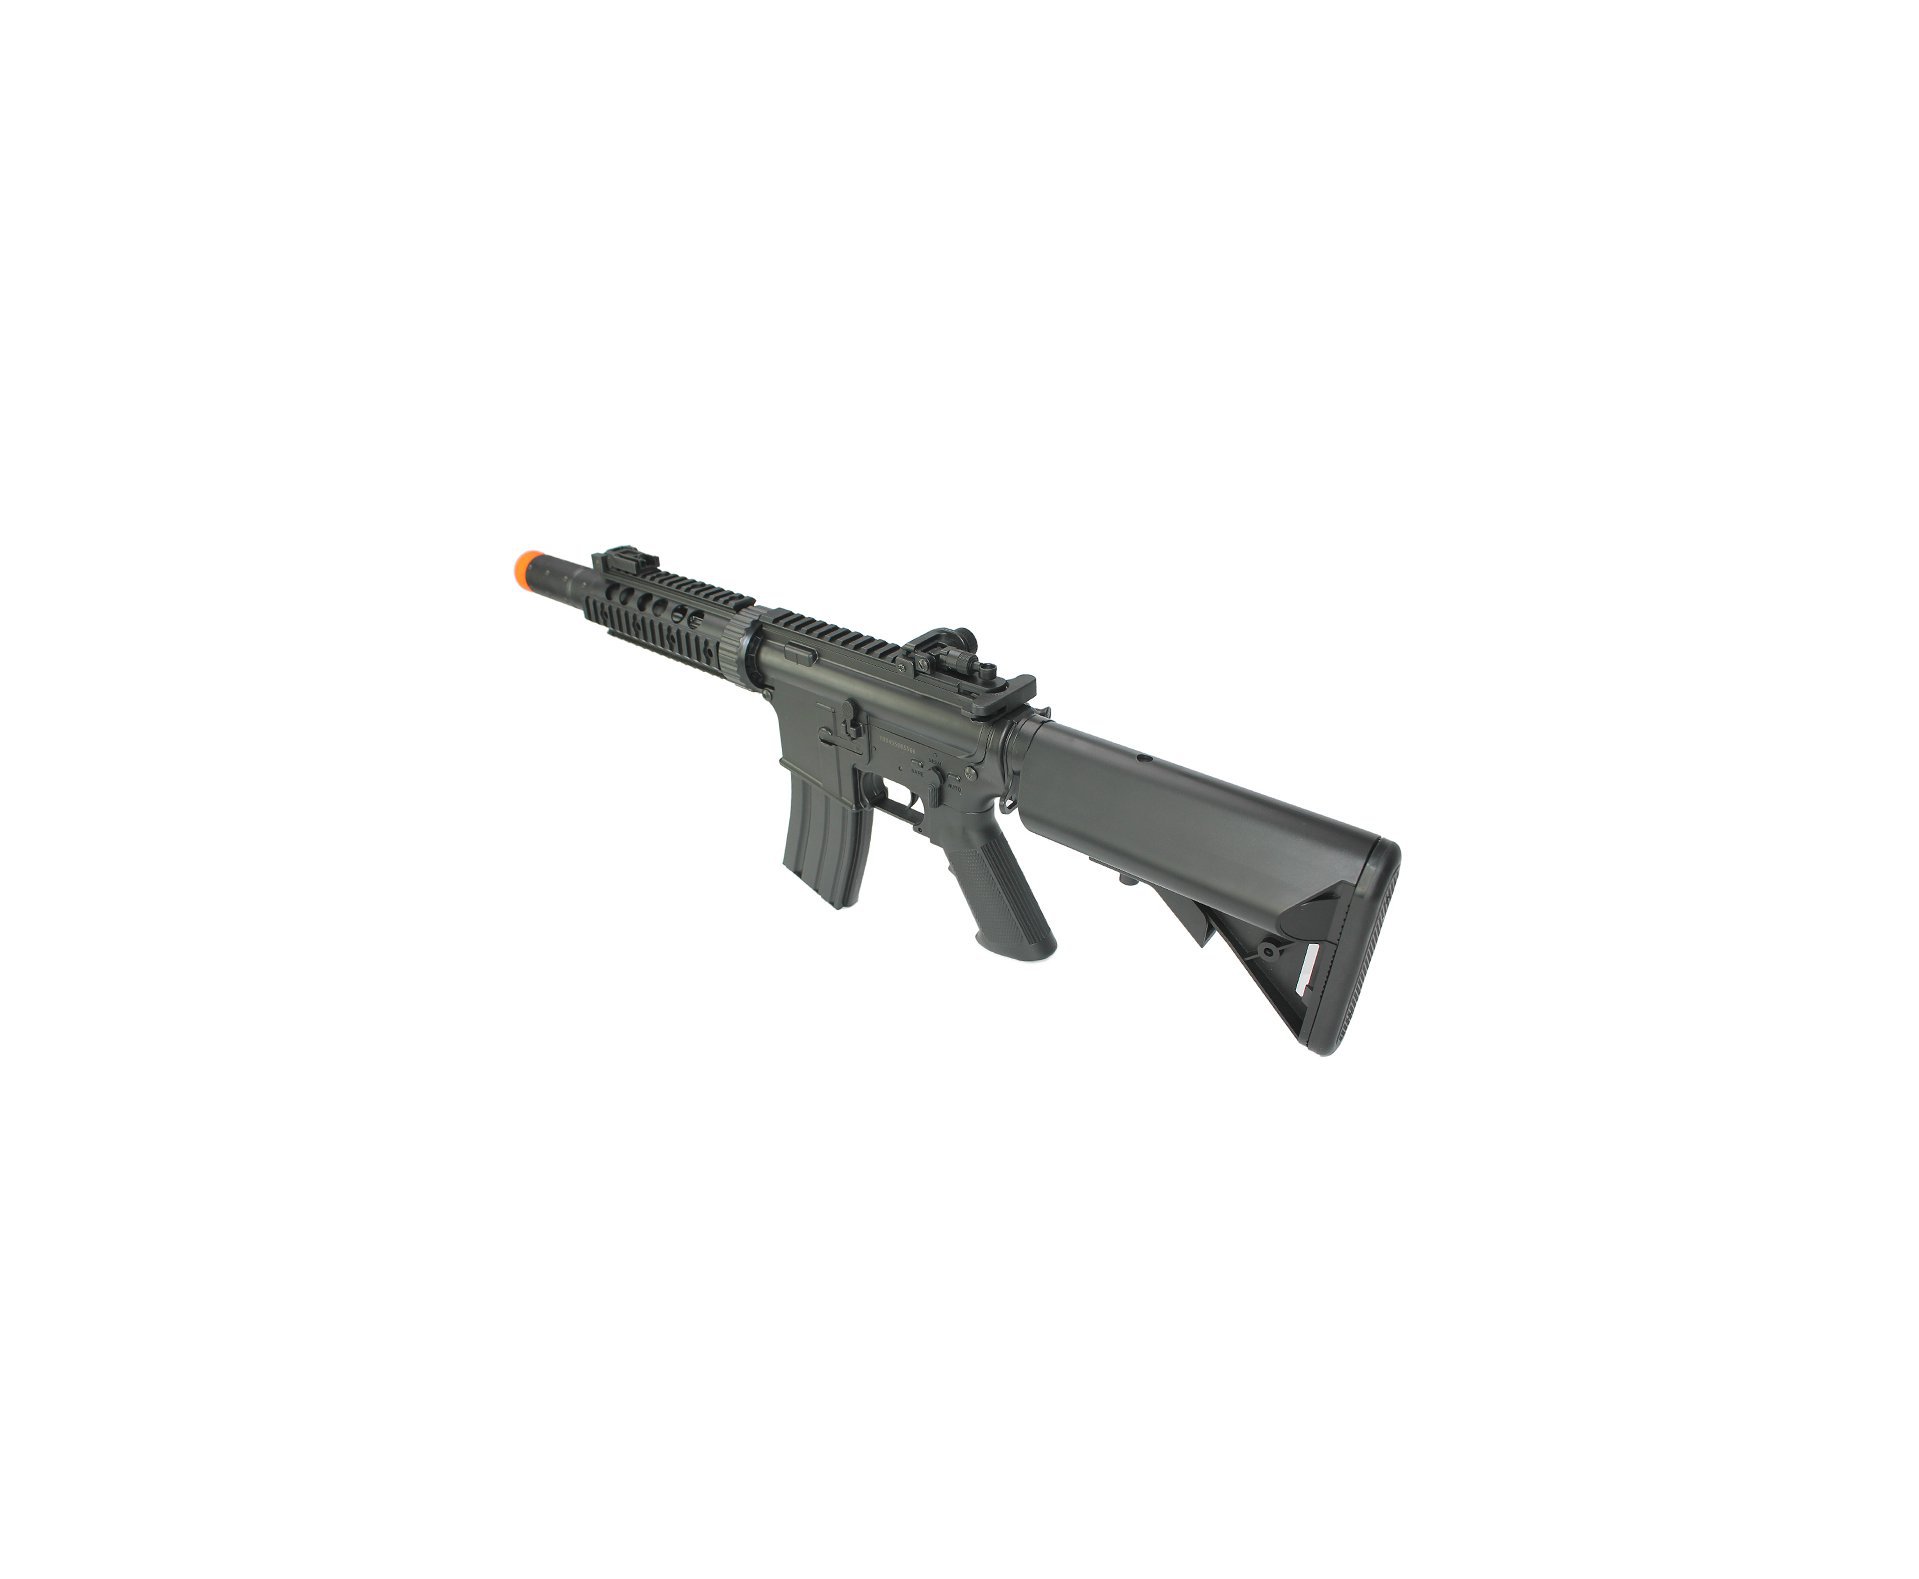 Rifle De Airsoft M4a1 Ris Black Cal 6mm - Eletrico - Bivolt - Cyma + Red Dot 1x30 + Capa